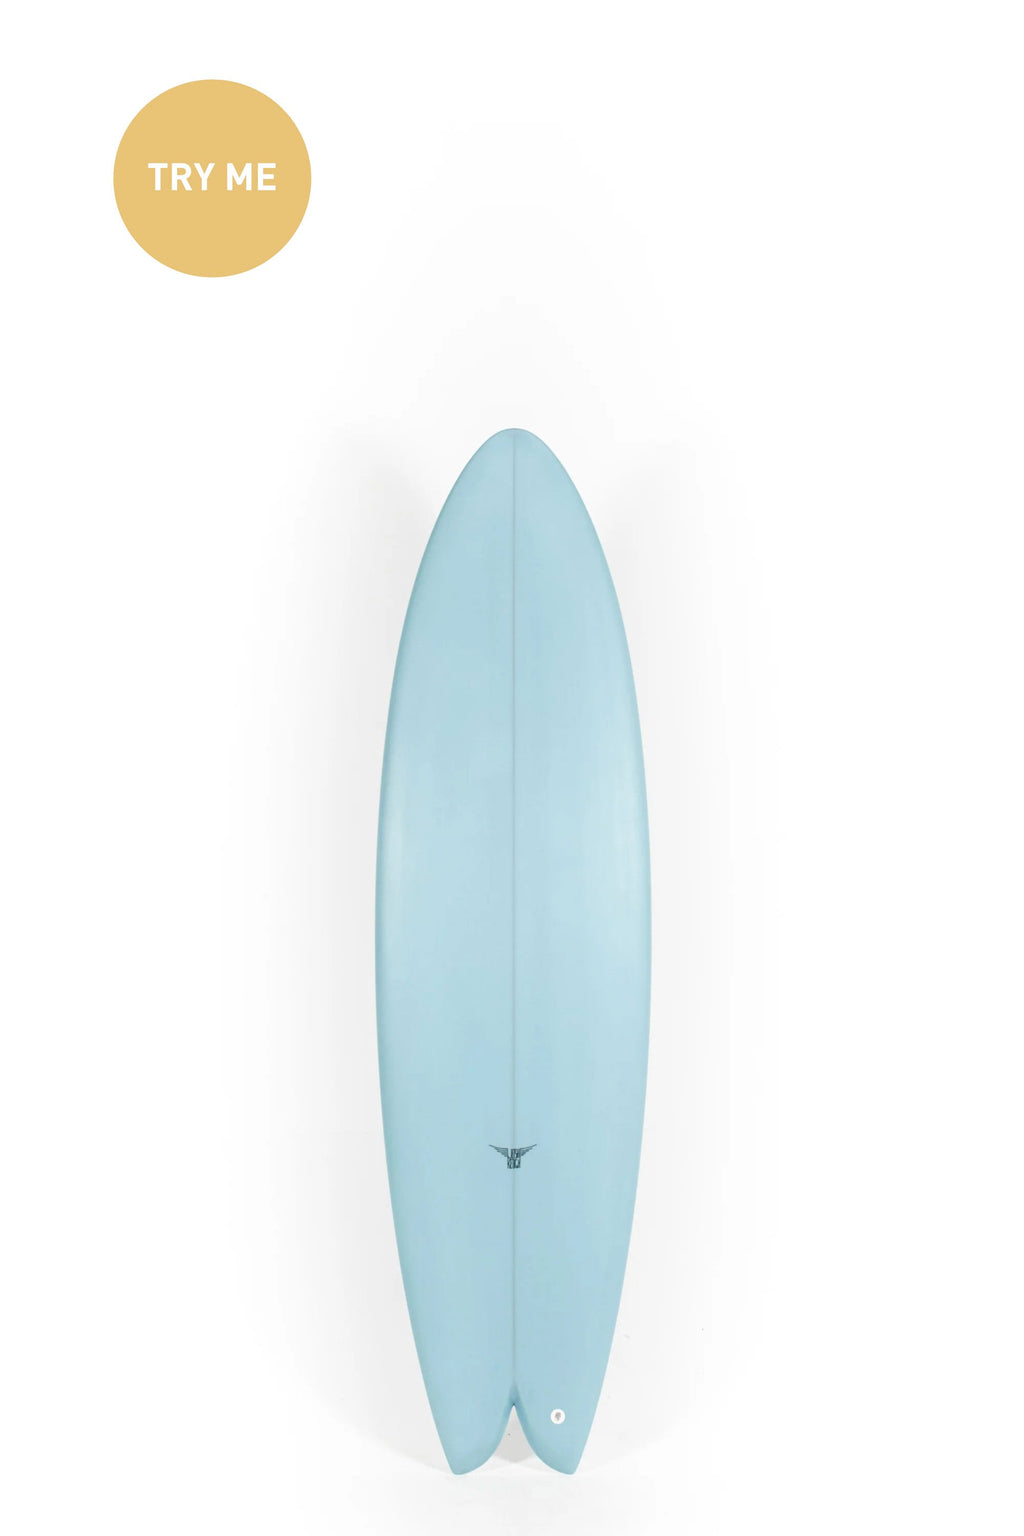 Pukas-Surf-Shop-Joshua-Keogh-Surfboards-M2